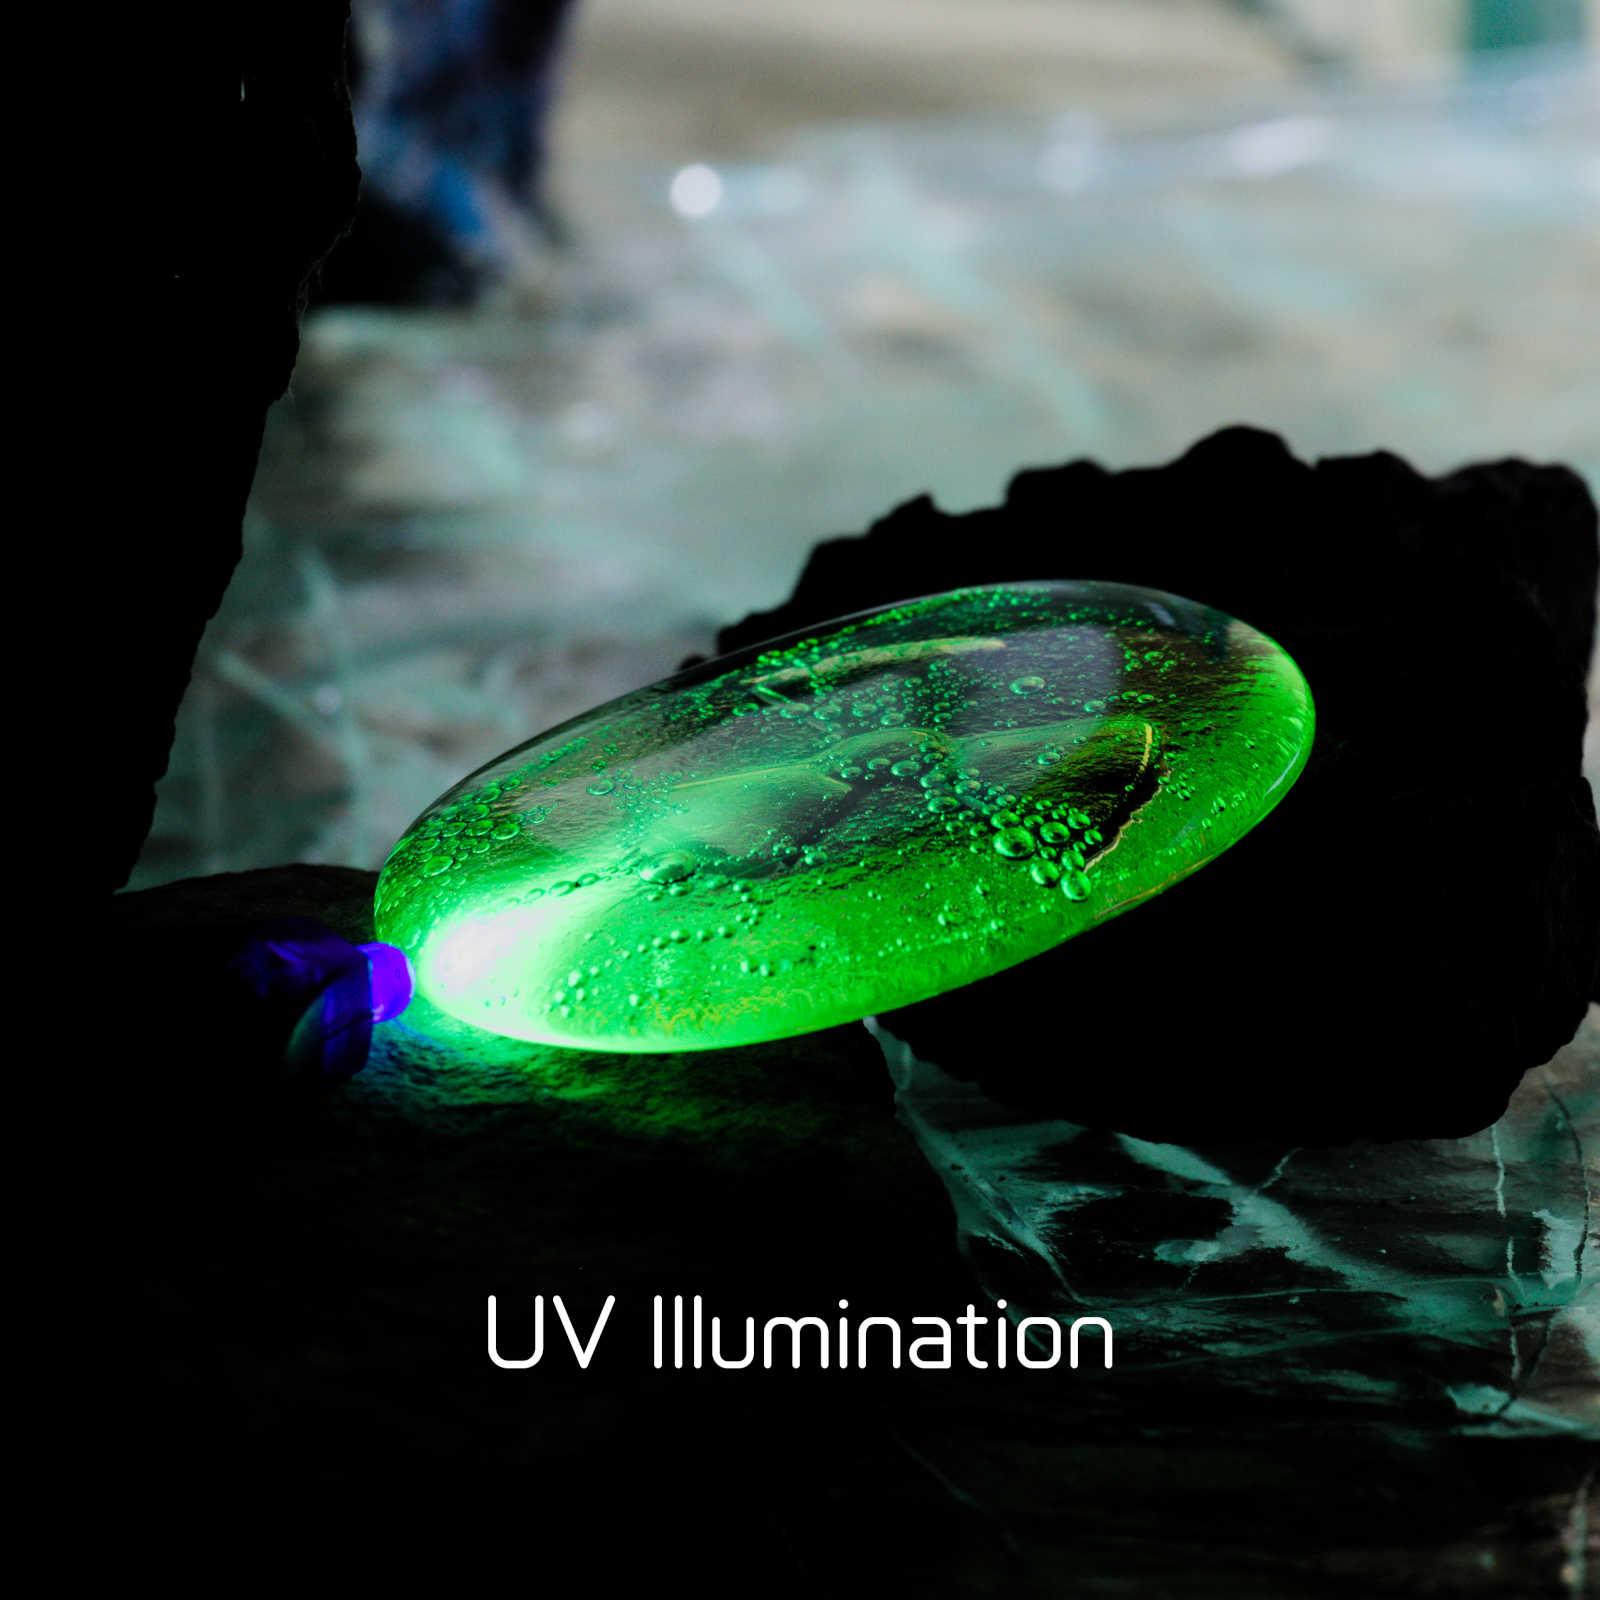 Uranium Glass, Trefoil Motif under UV light